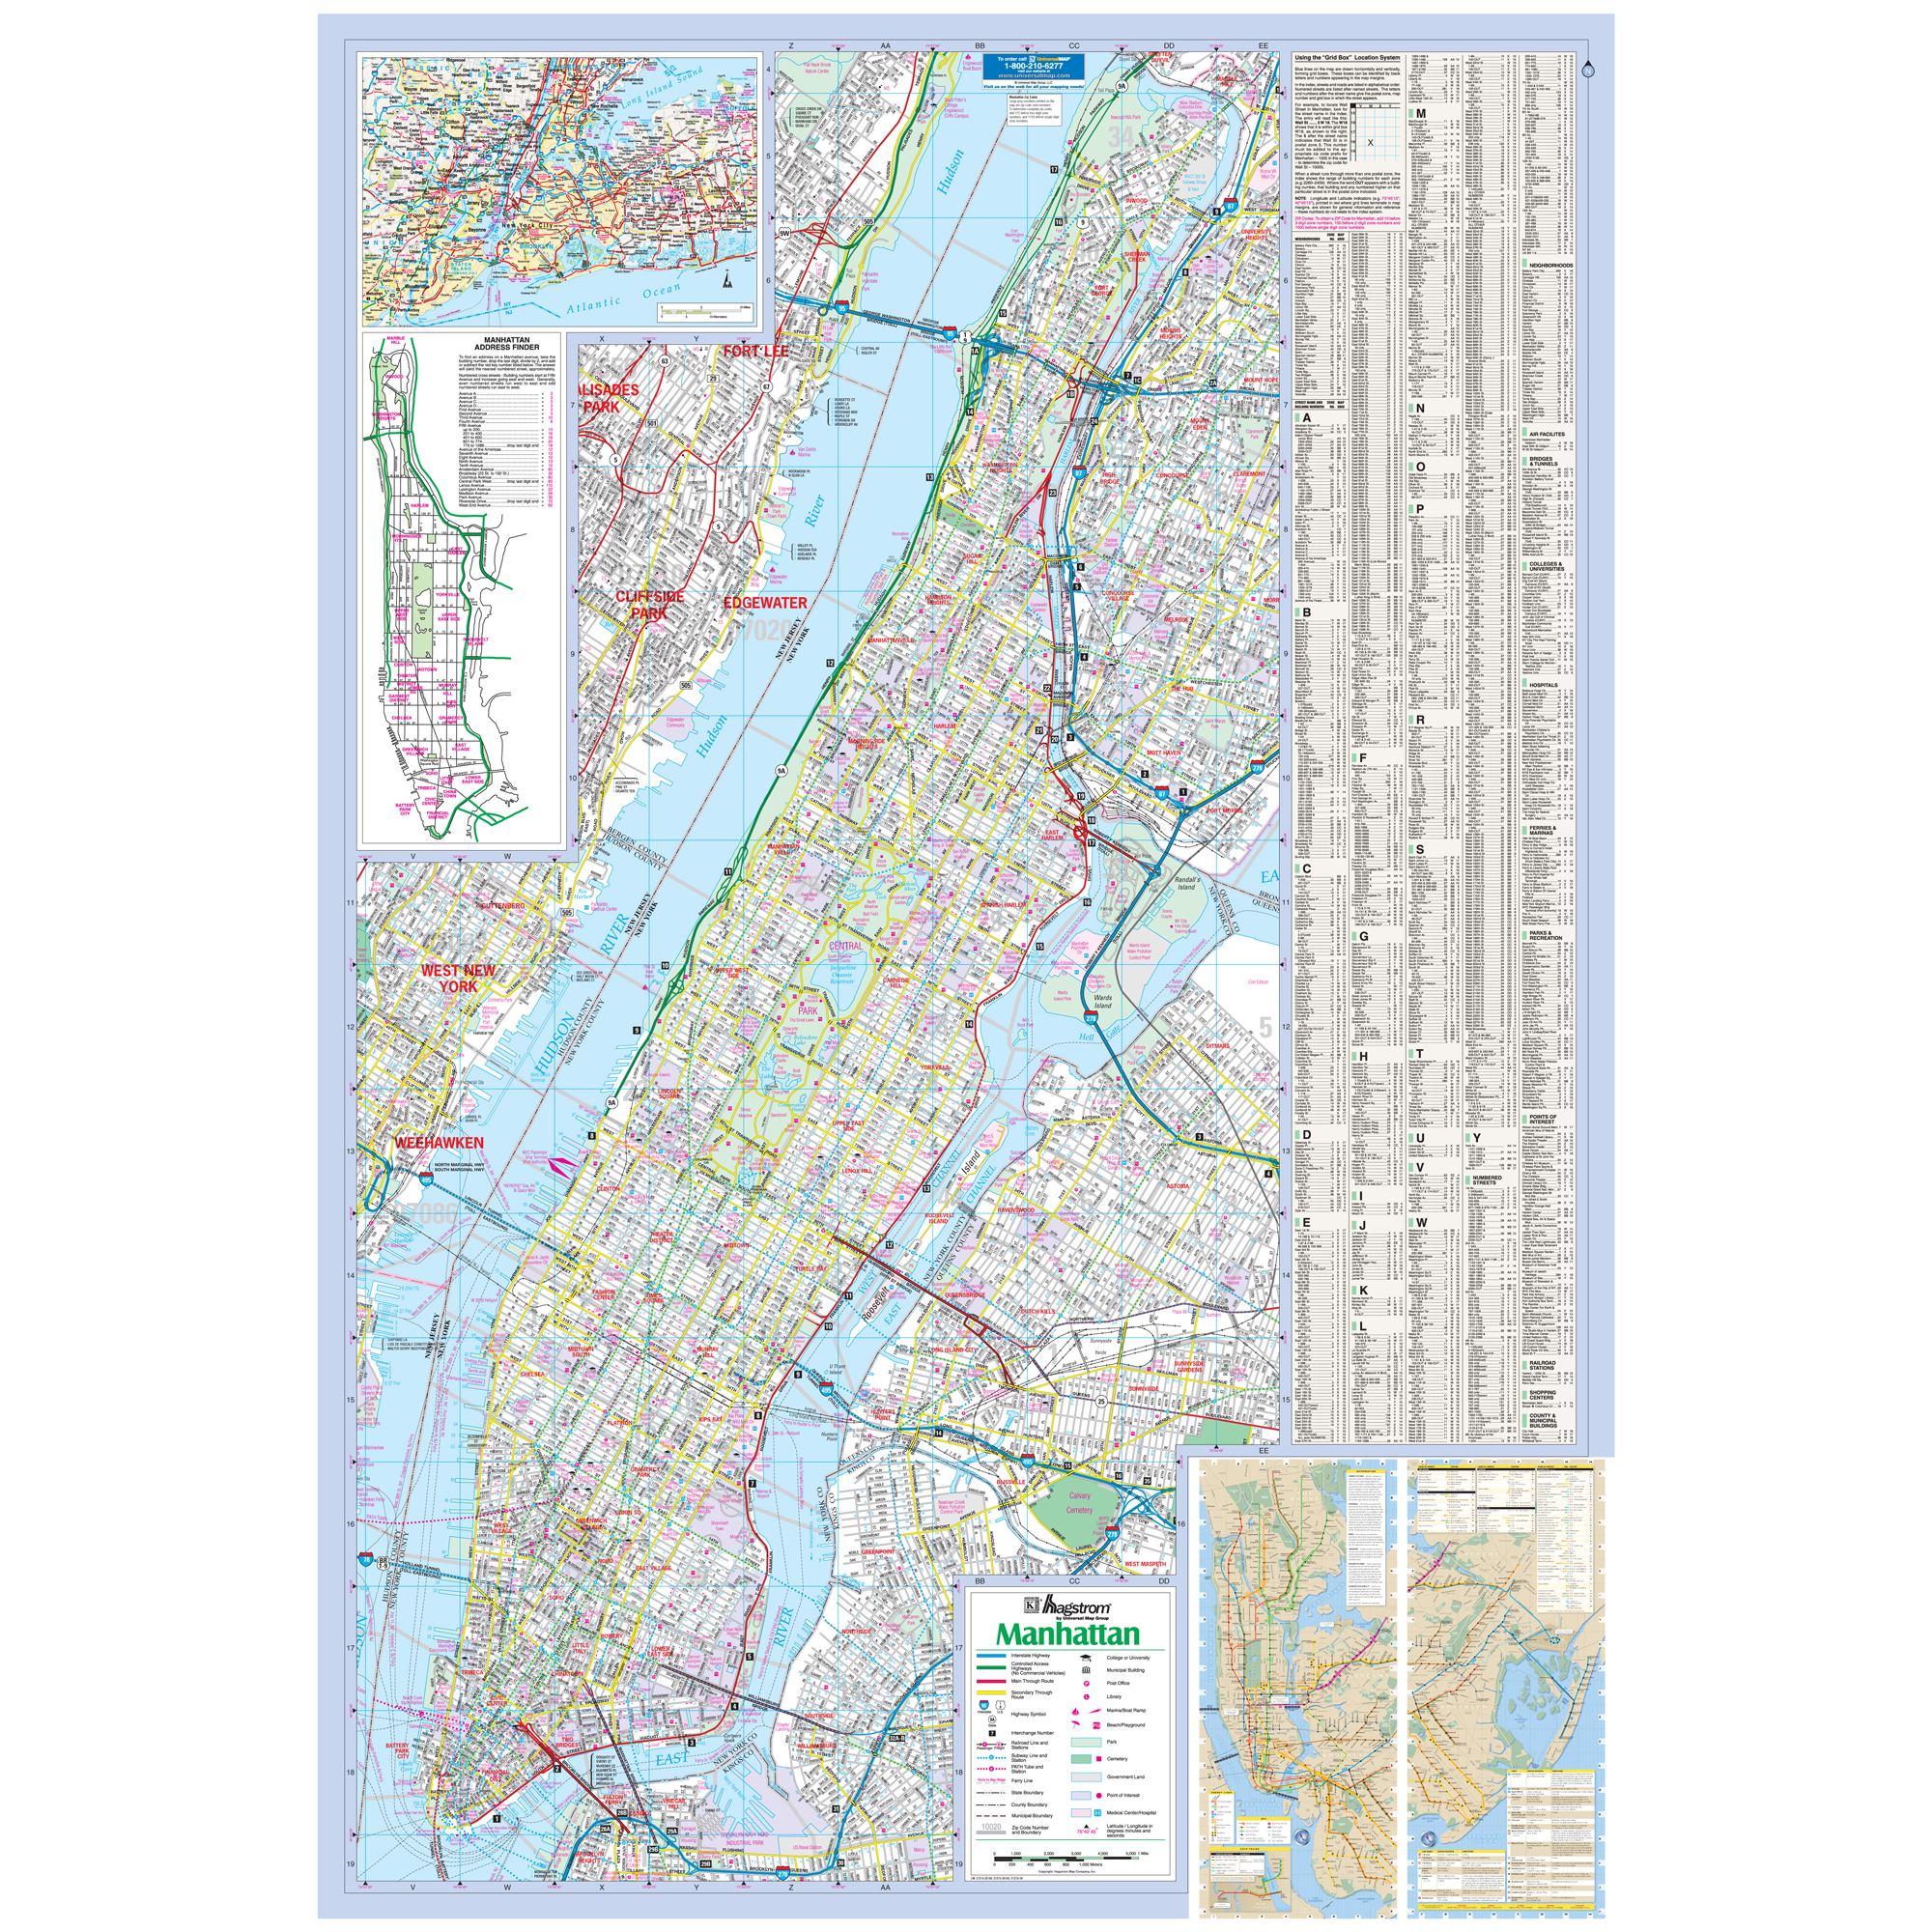 Manhattan, Ny Wall Map - Large Laminated